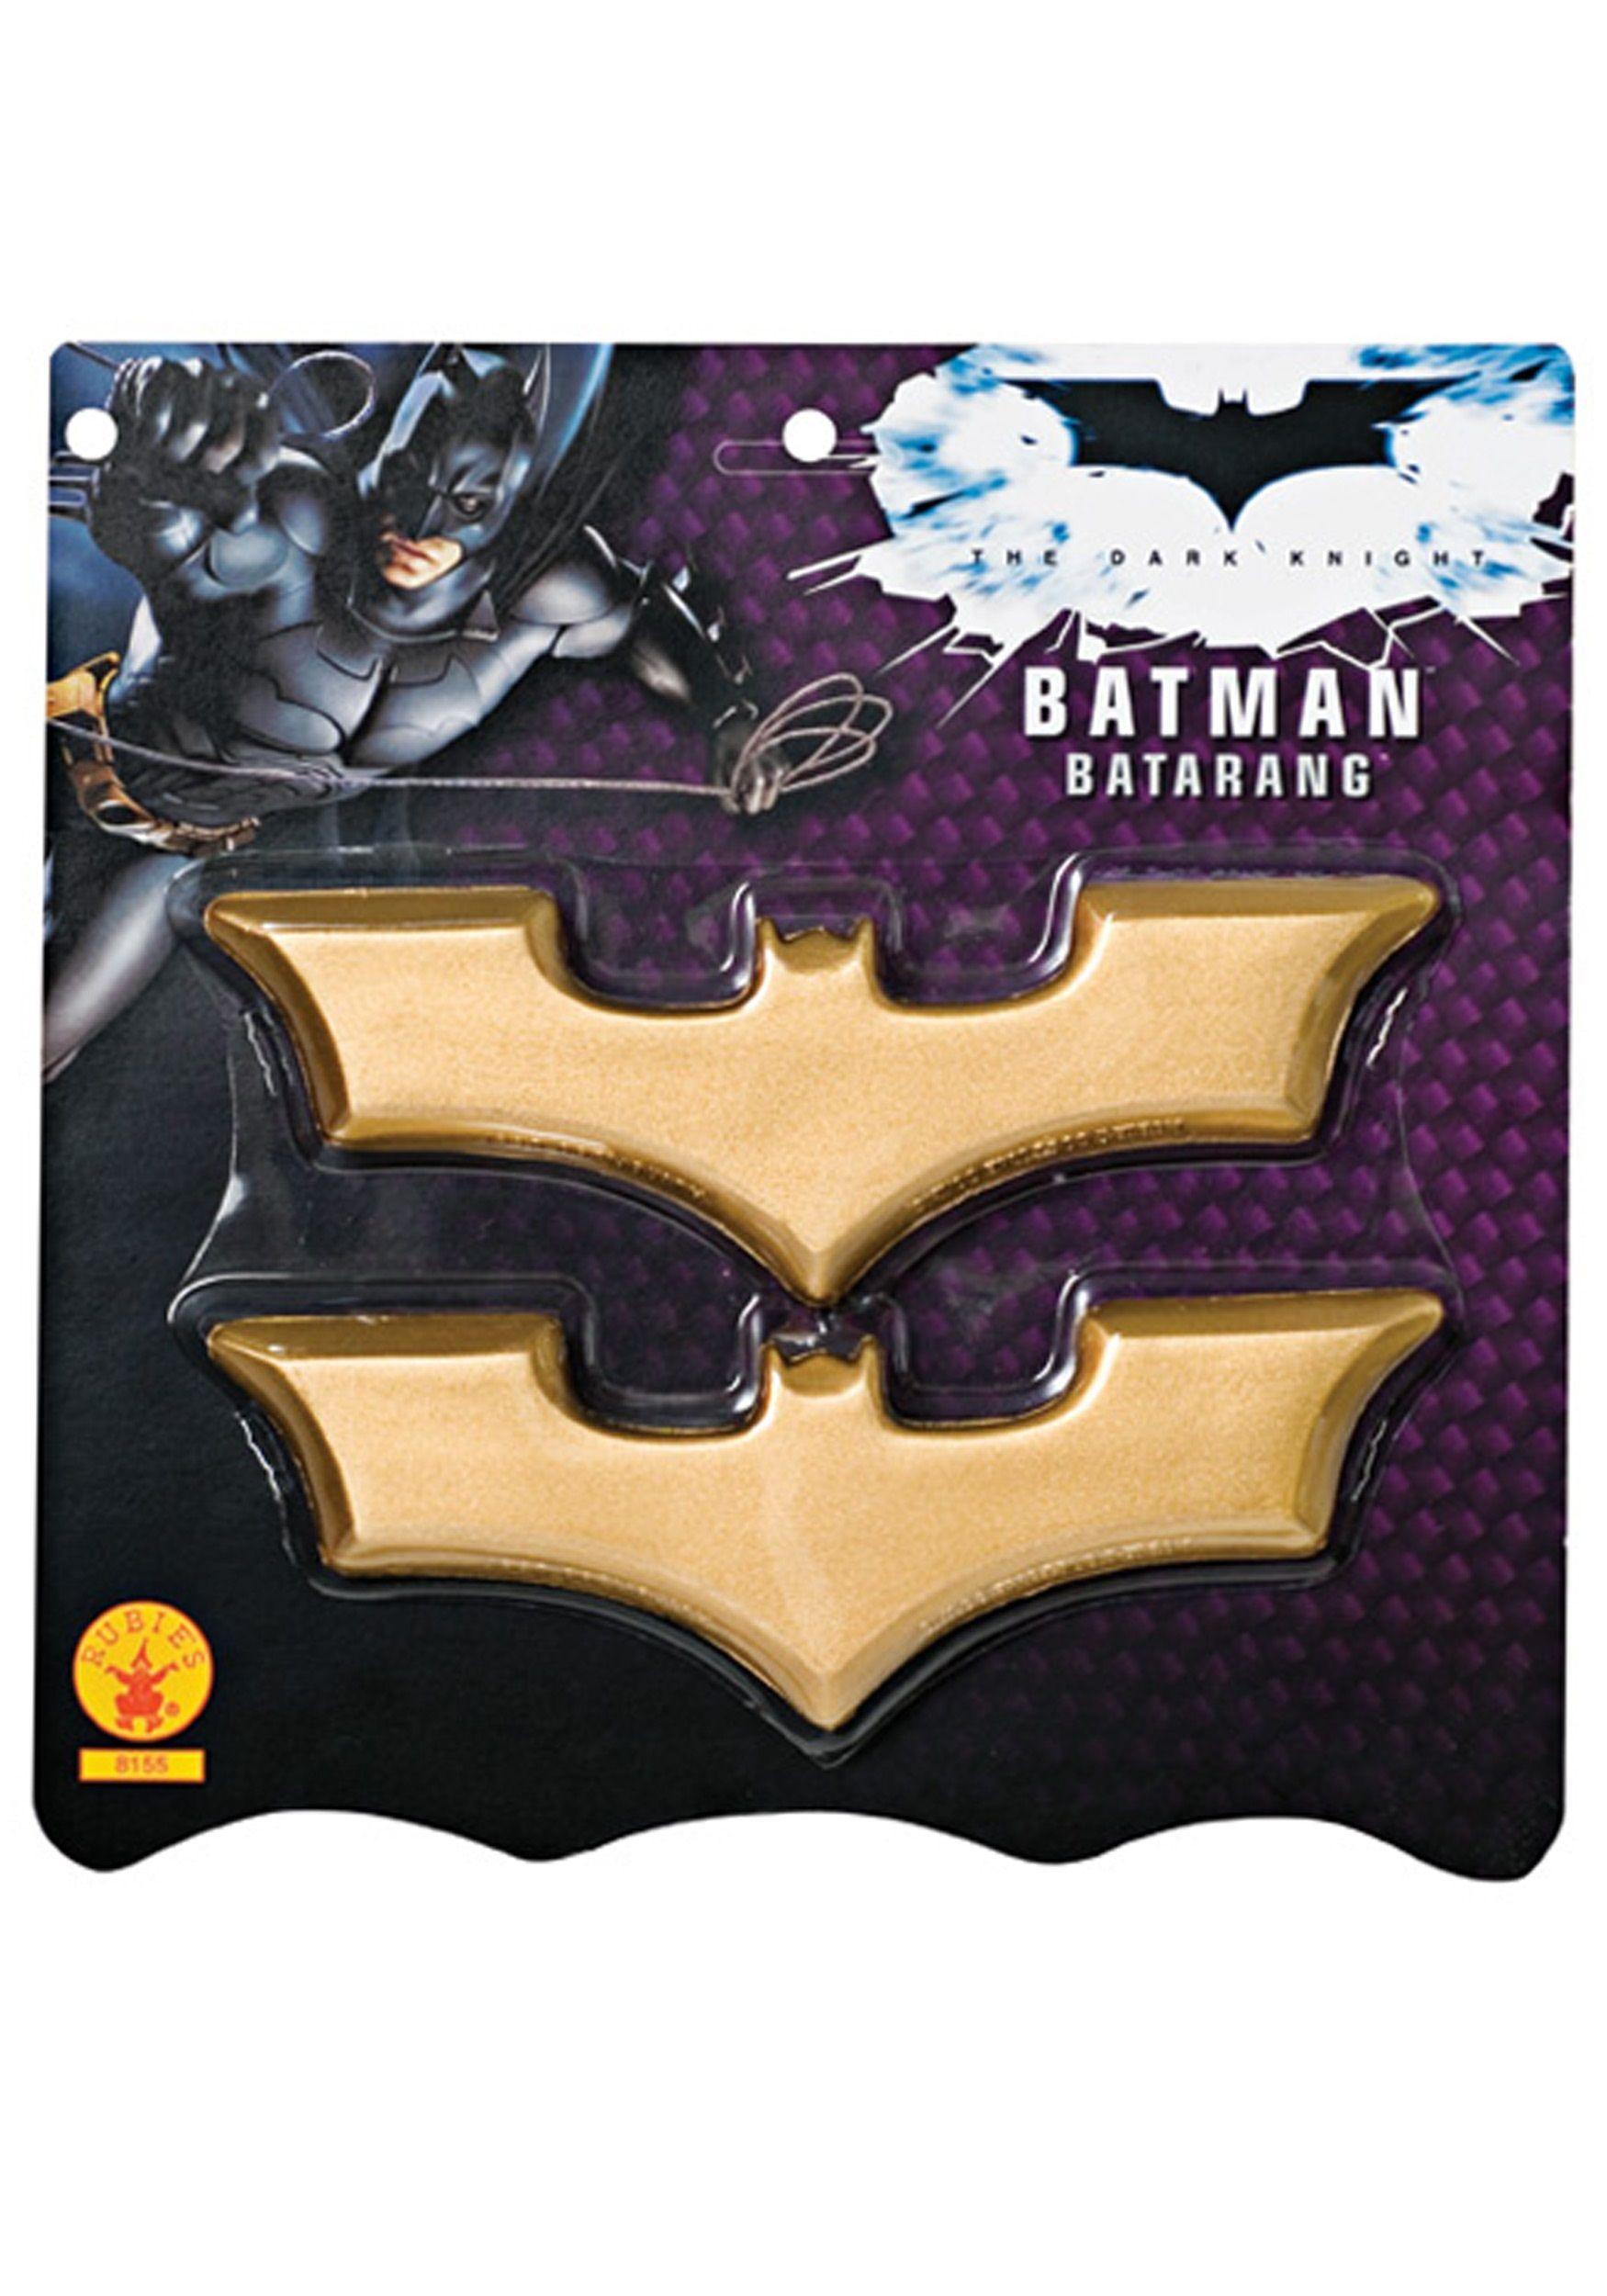 Batman Boomerang Logo - Batman Boomerangs - Batman Dark Knight Costume Accessories